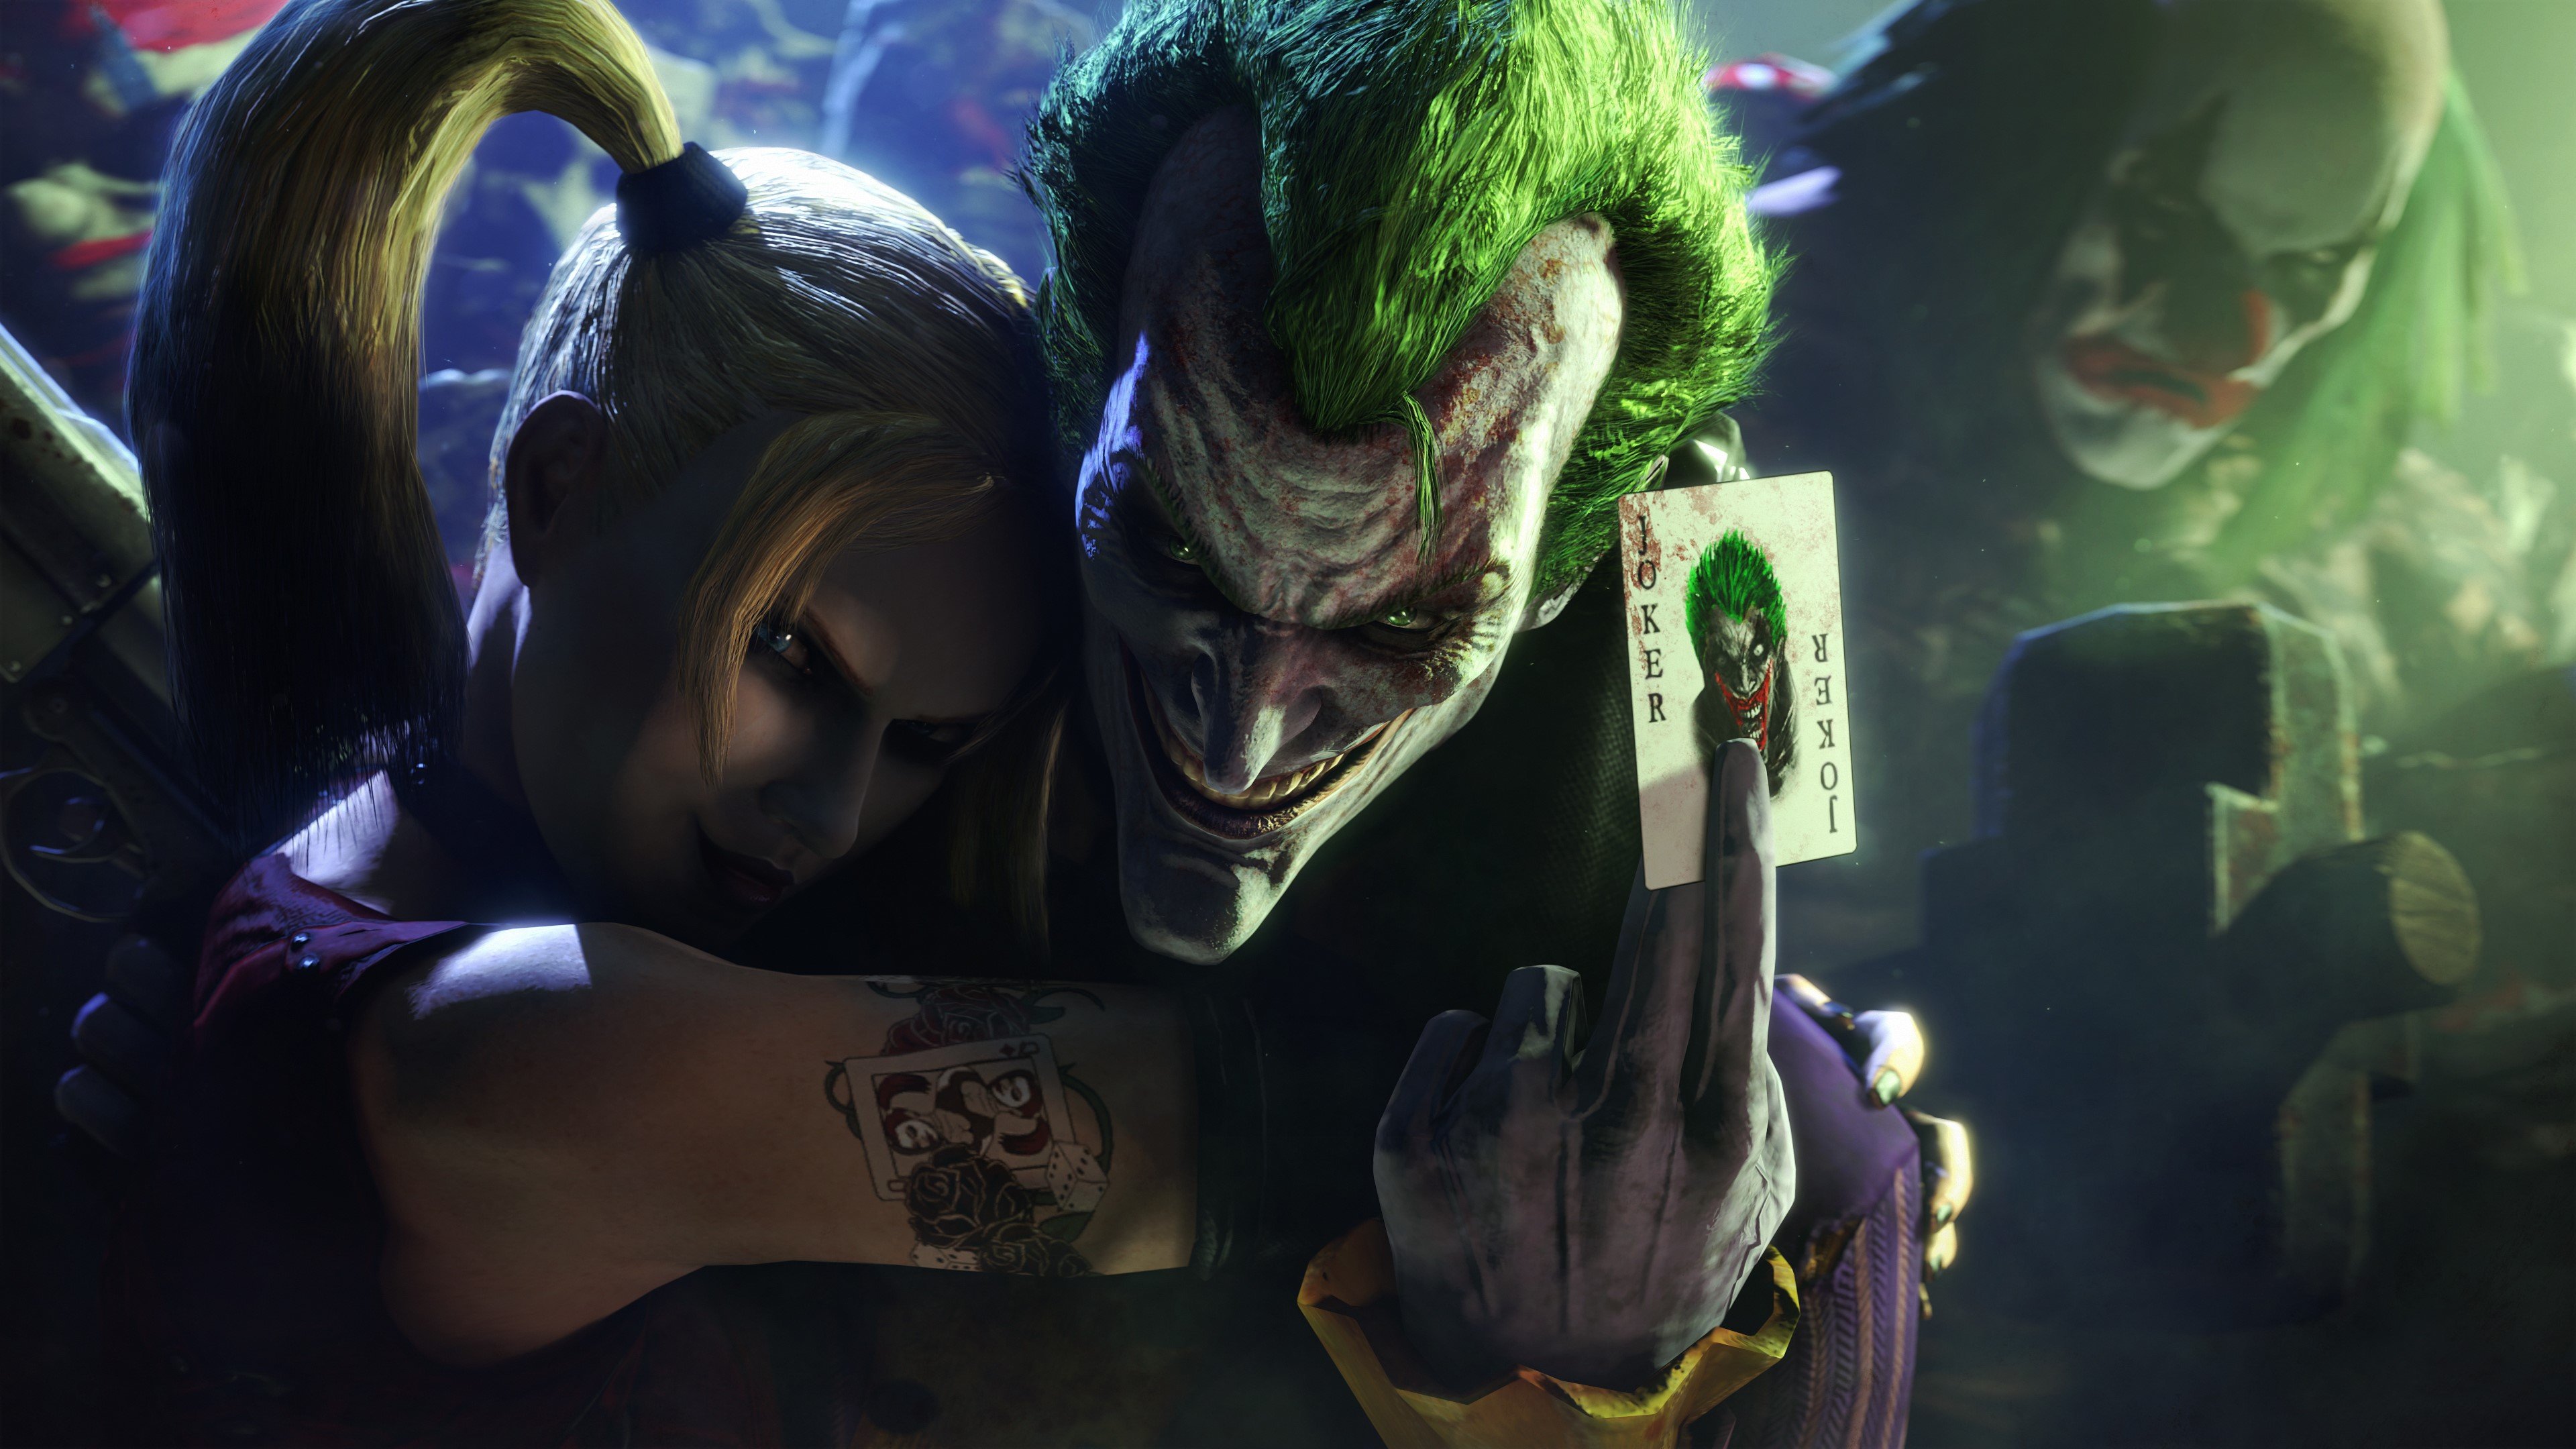 Fondos de pantalla Joker y Harley Quinn de Batman Arkham